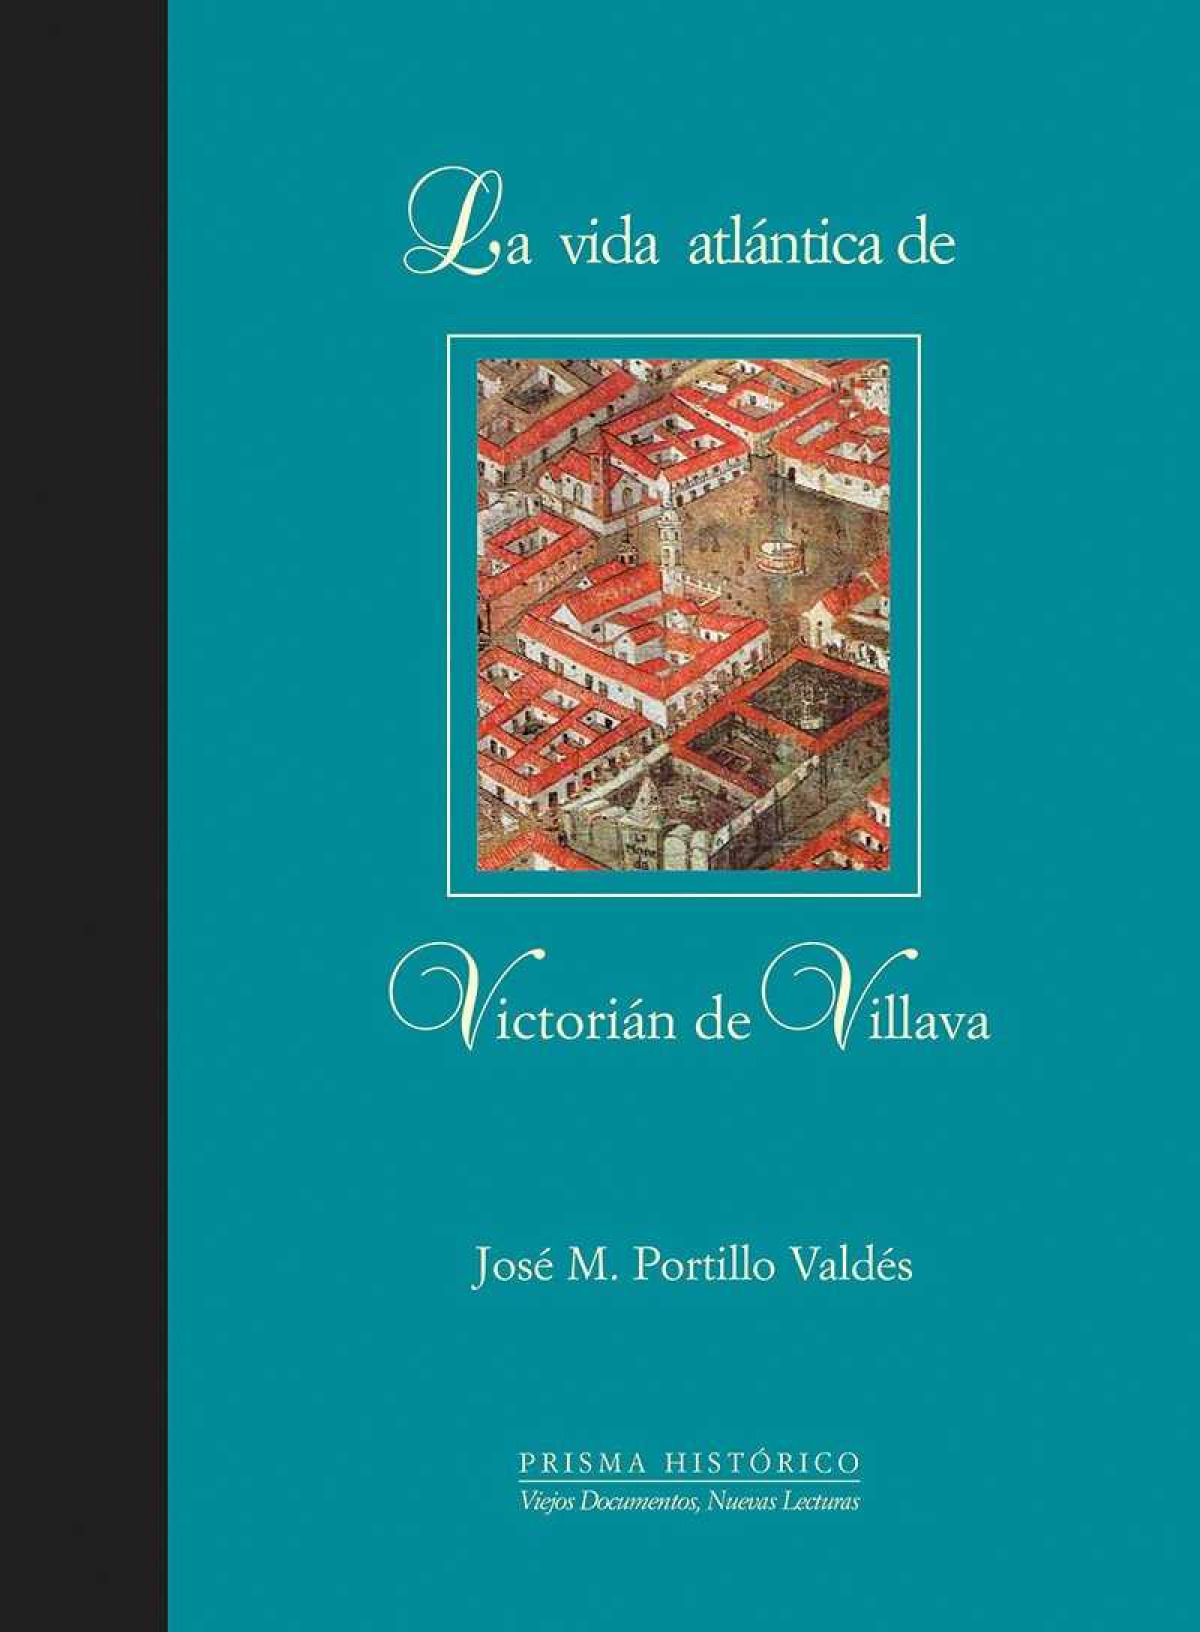 Xi.la vida atlantica de victorian de villava - Portillo Valdes, Jose M.